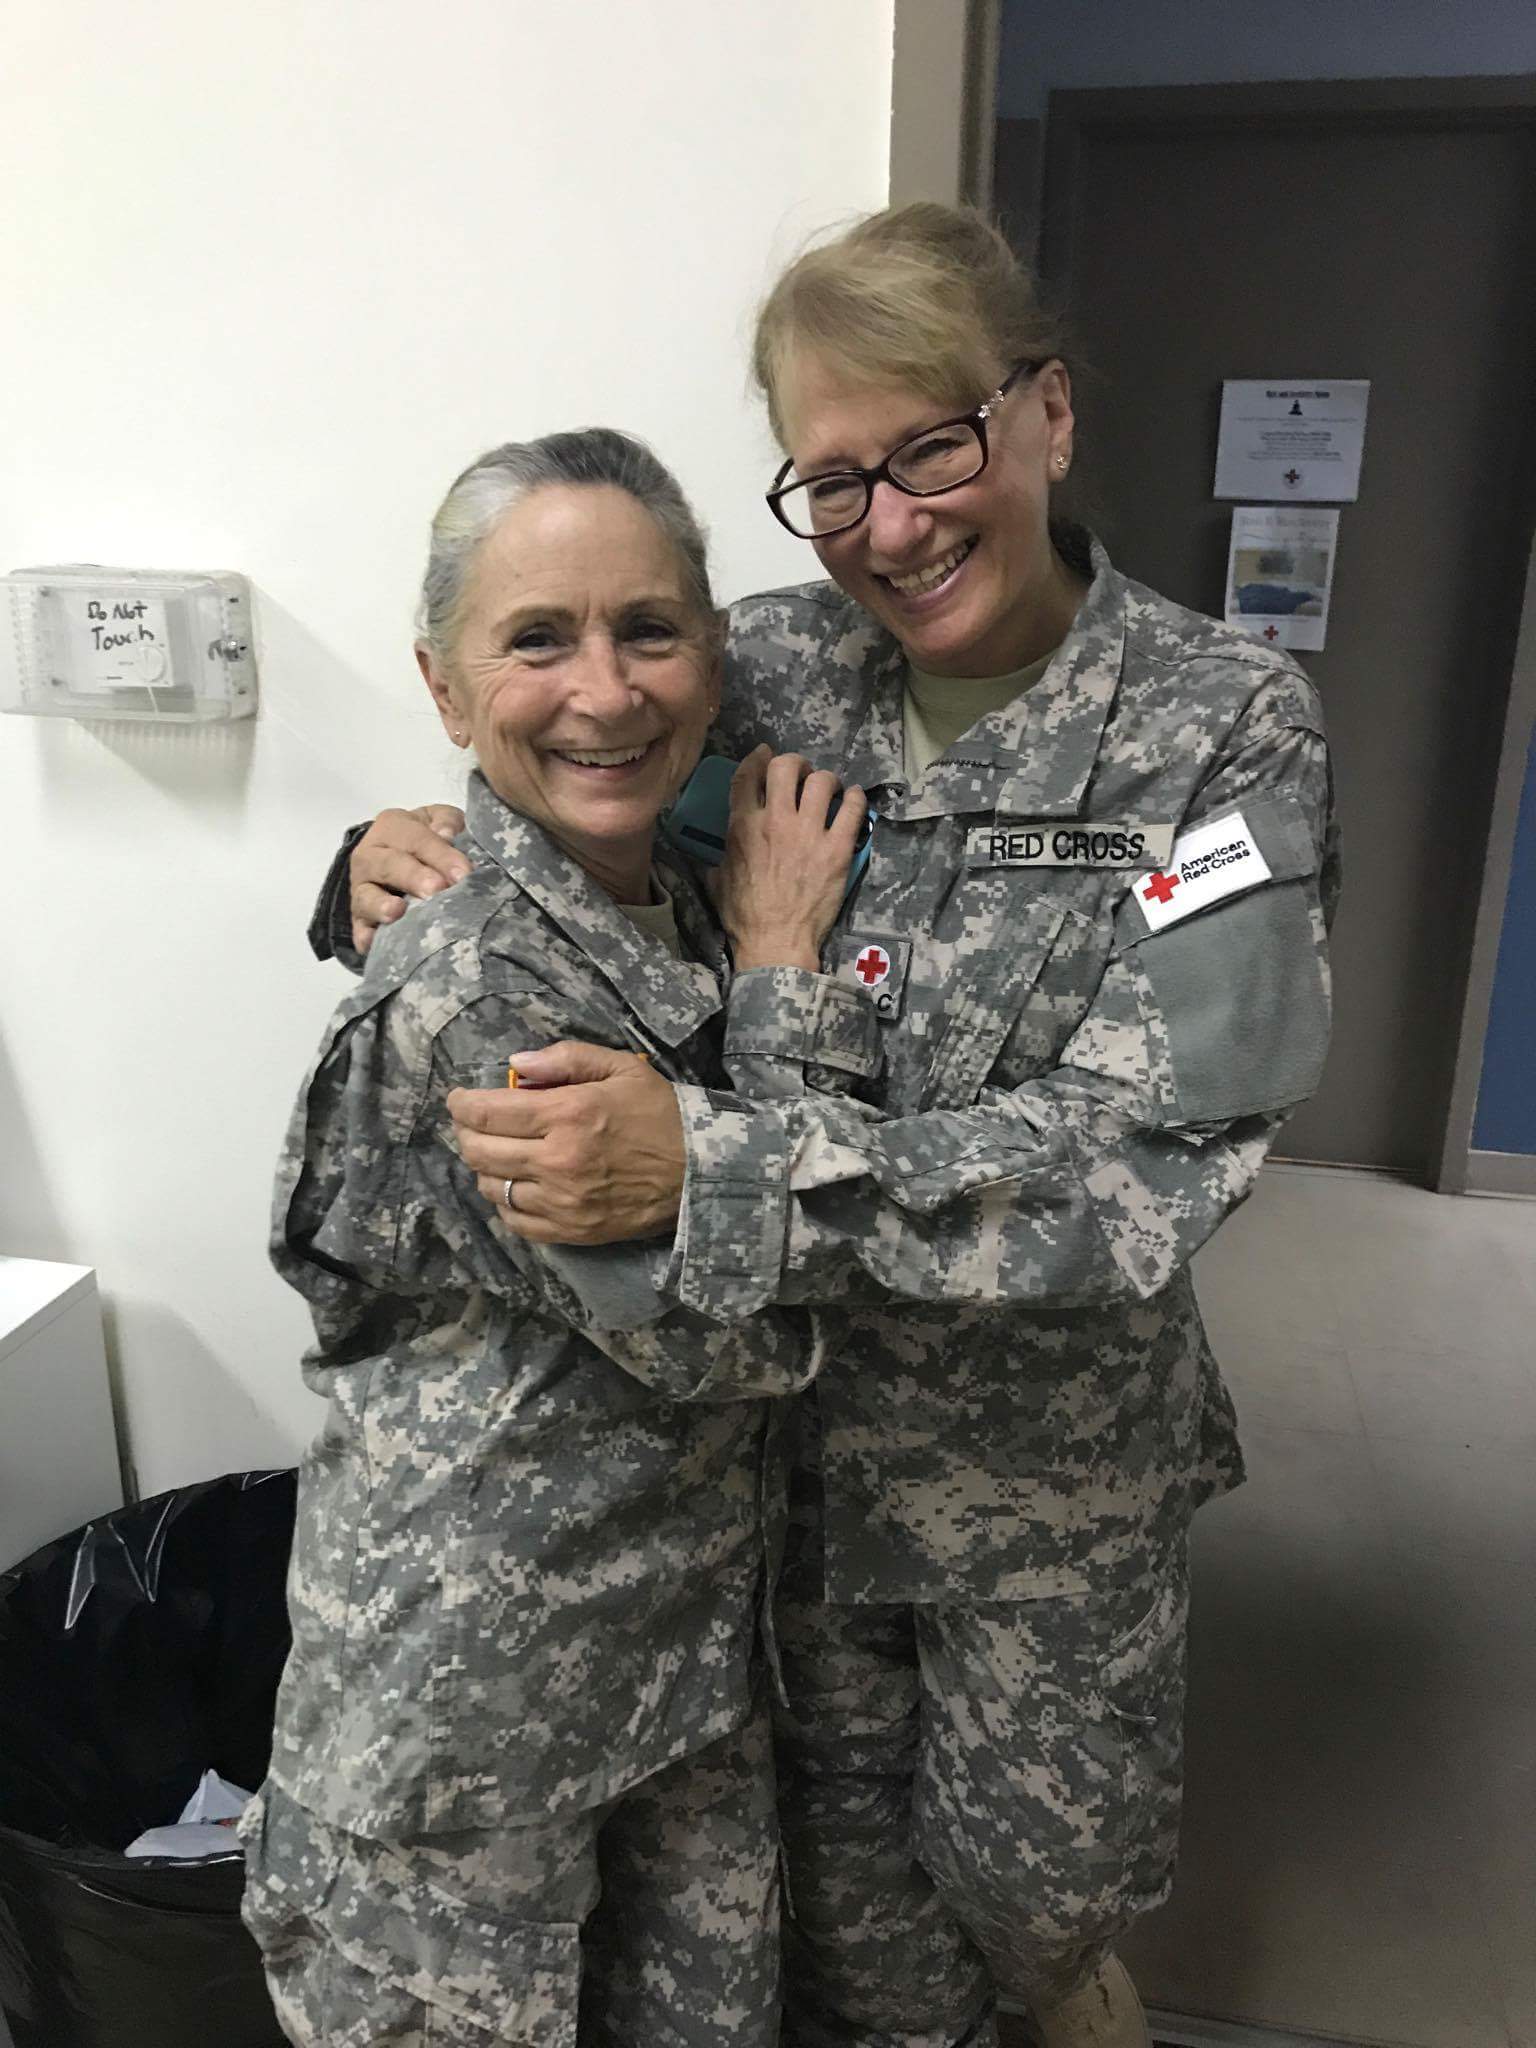 Phyllis hugging her friend and volunteer, Cheryl Searcy. 